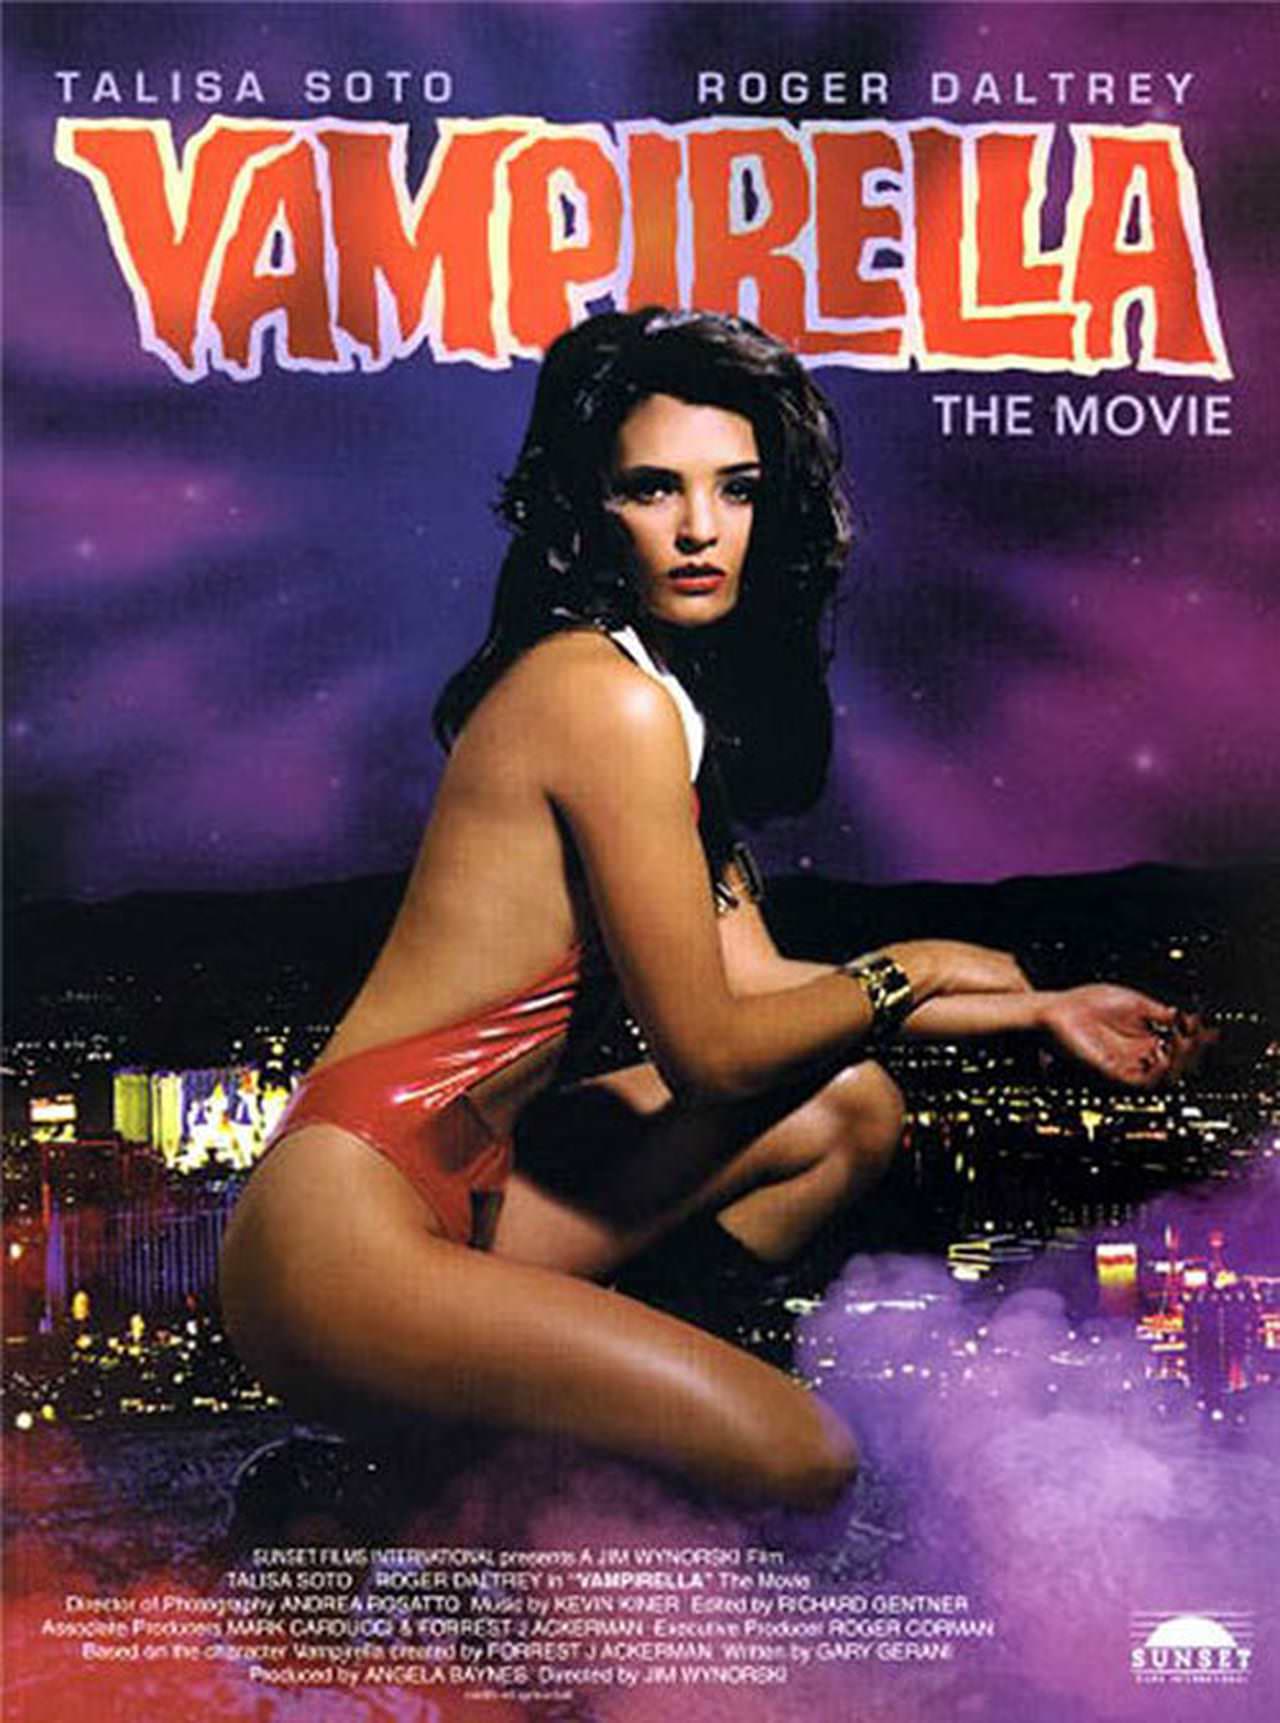 Vampirella 1996 Live Action Movie is mostly ok